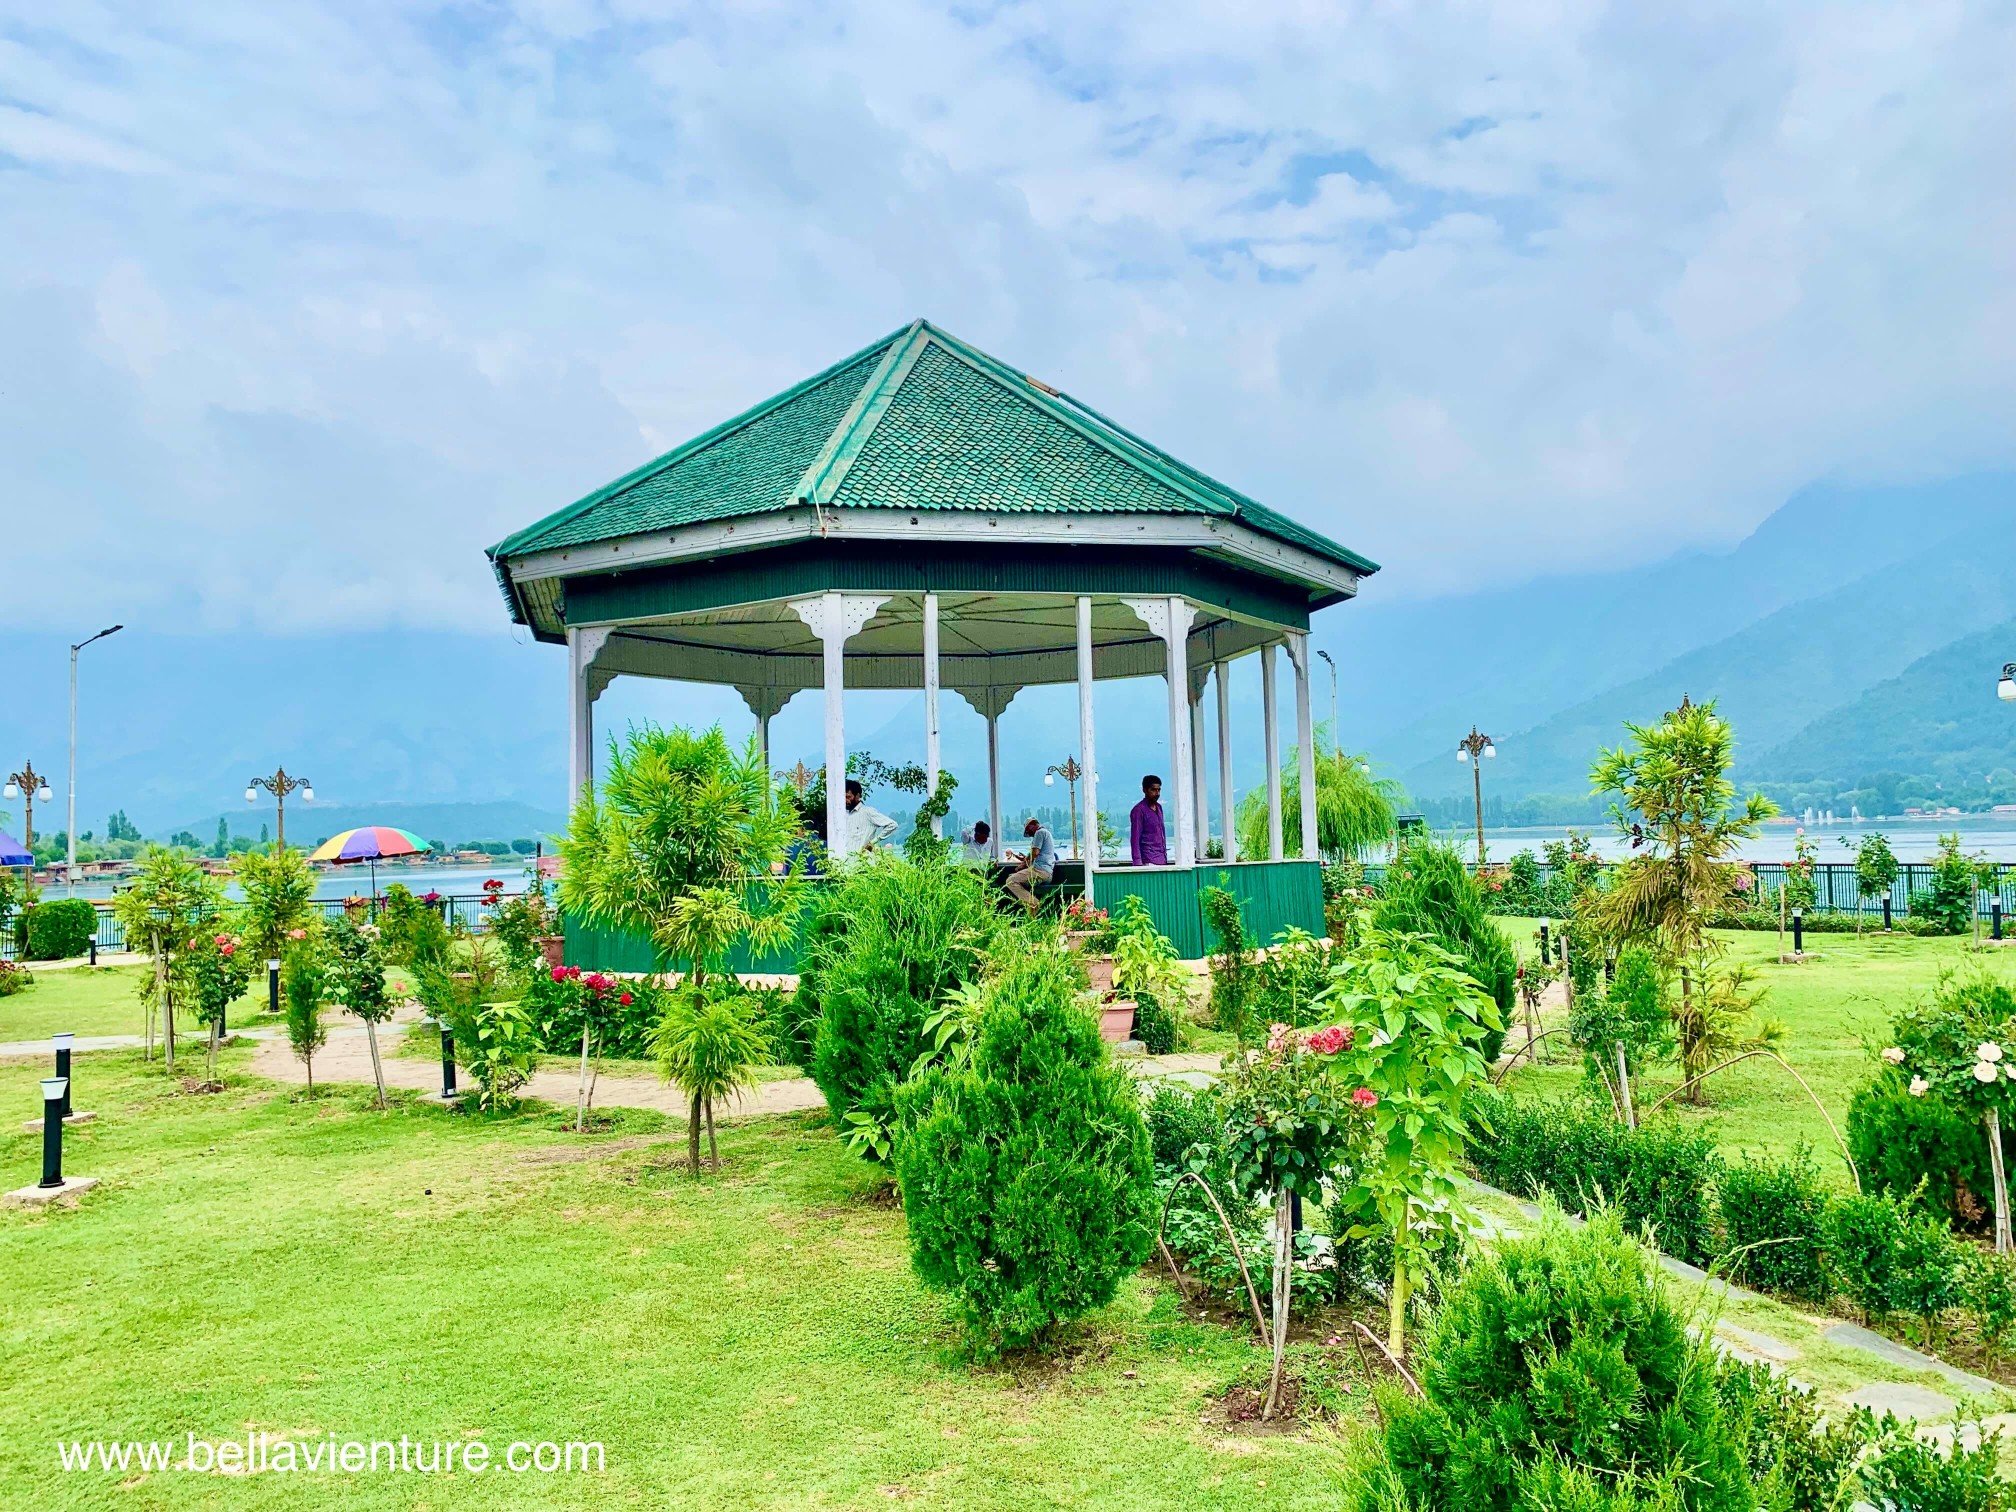 印度 India 北北印 north India 喀什米爾 Kashmir 花園 garden 斯里納加 Srinagar Dal lake